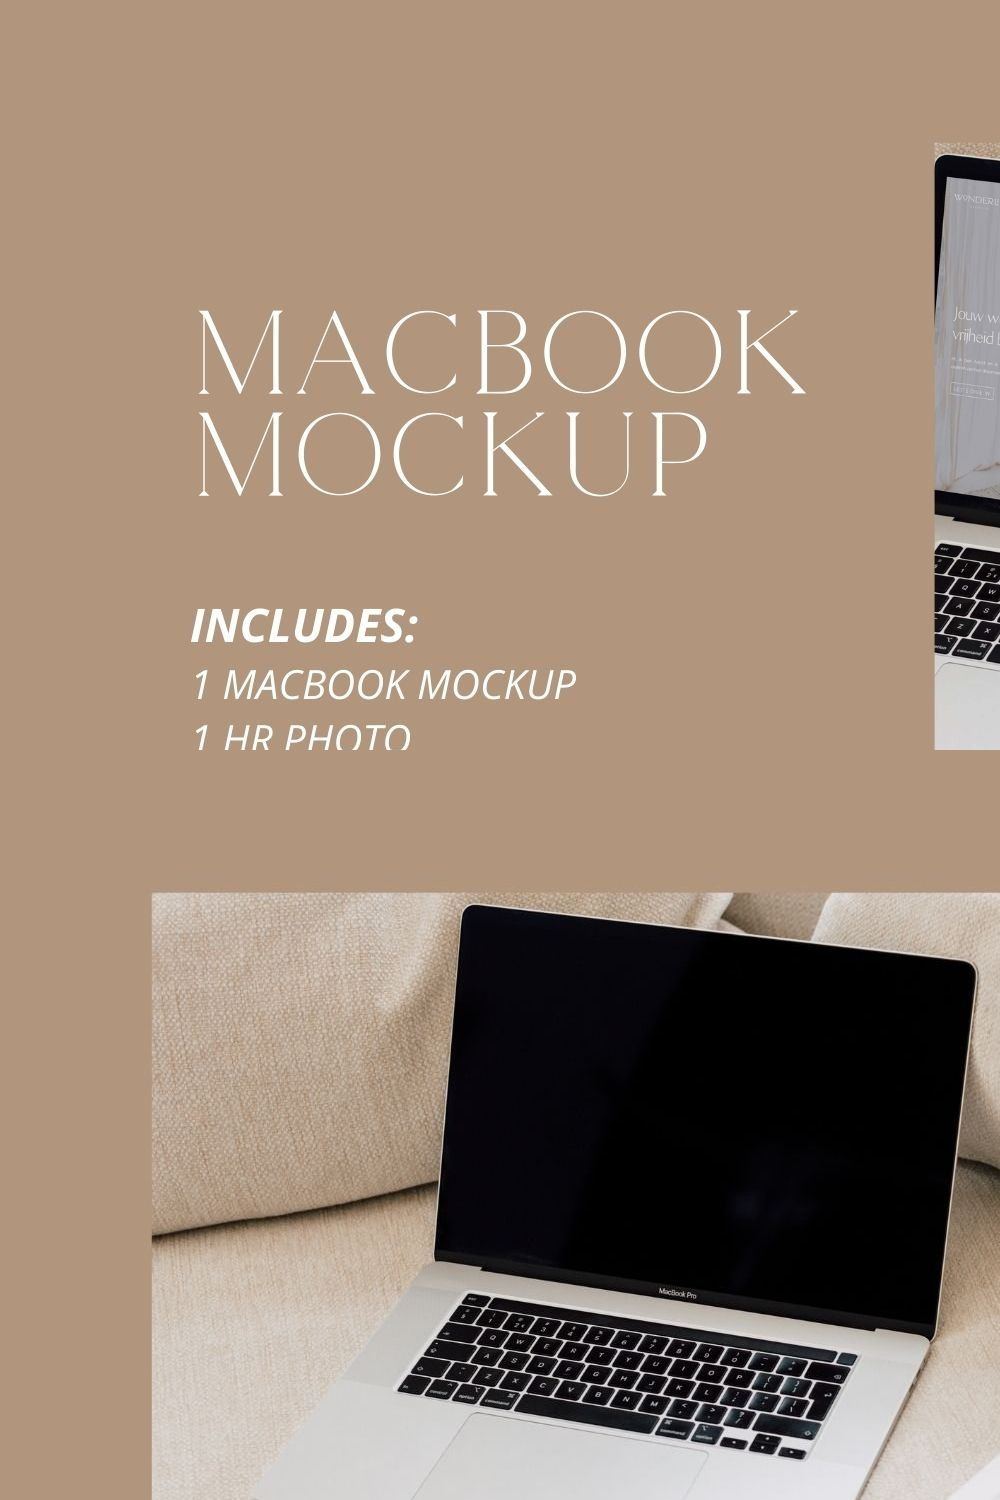 Macbook Mockup, RUBY 8 pinterest preview image.